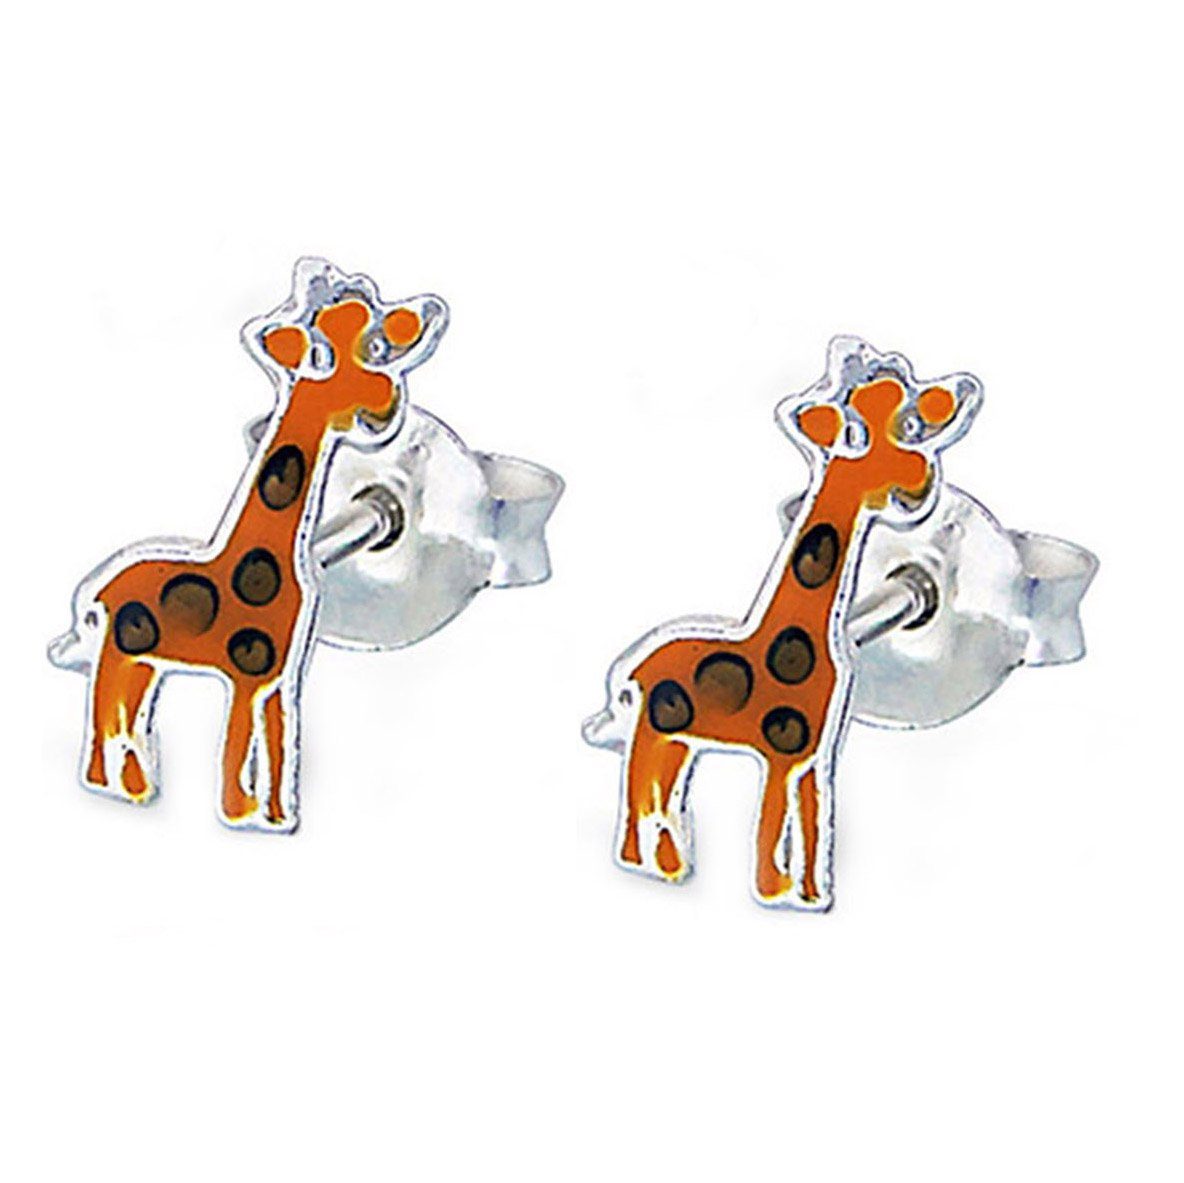 schmuck23 Paar Ohrstecker Kinder Ohrringe Giraffe 925 Silber, Kinderschmuck Mädchen Geschenk echte Silberohrringe